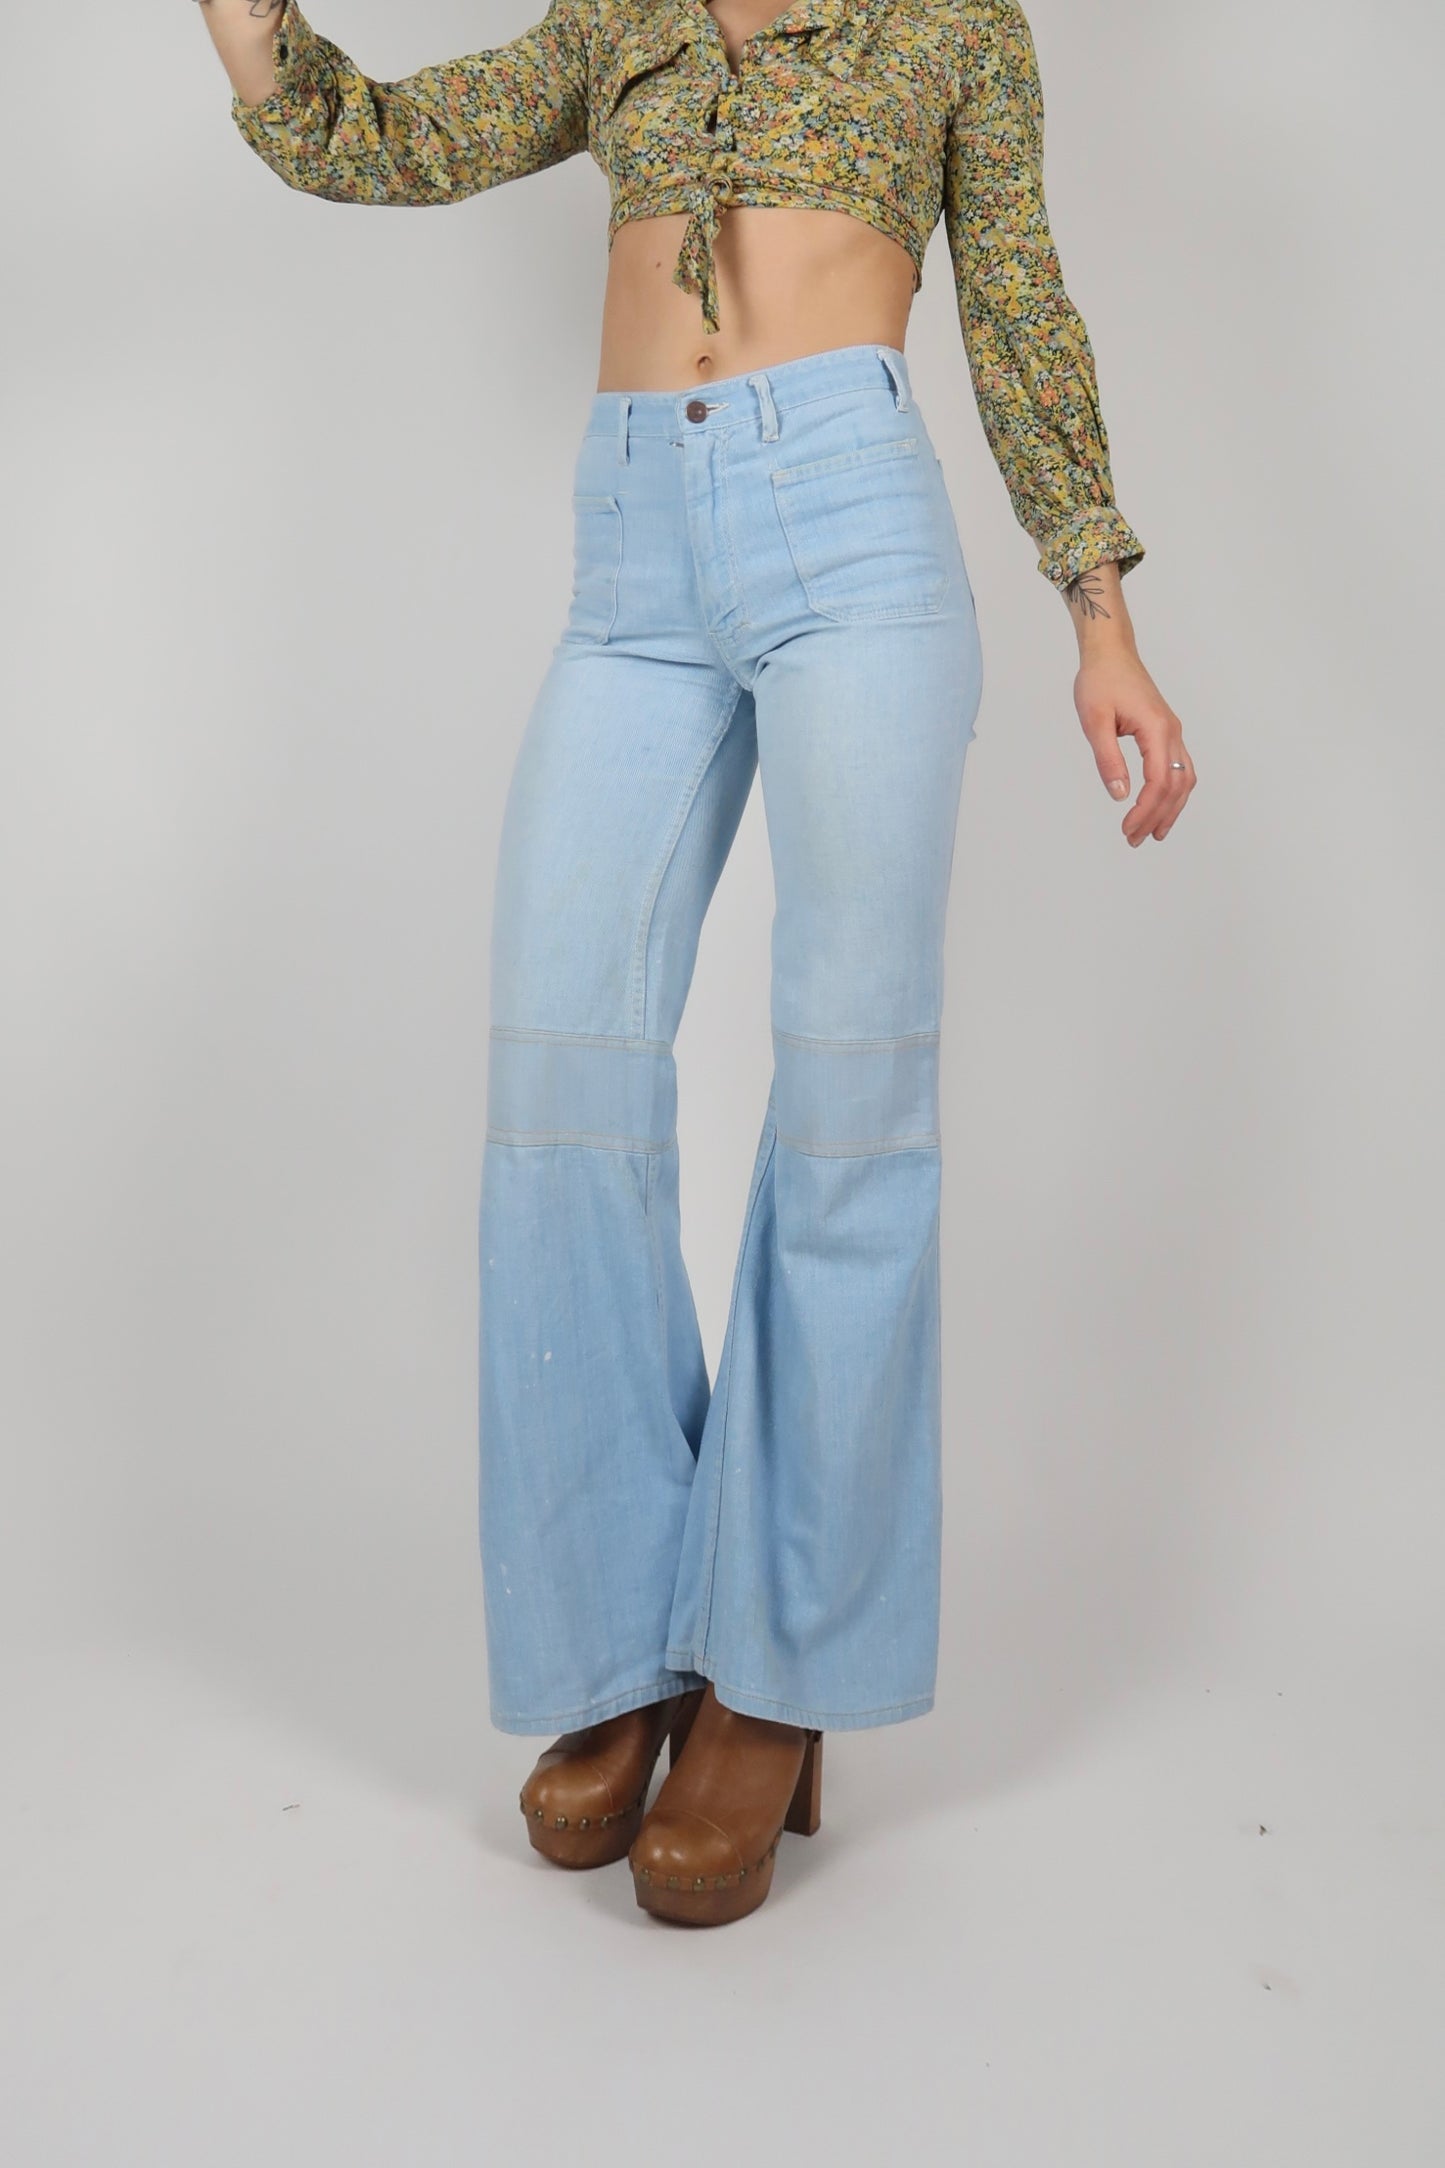 1970s Falmer jeans